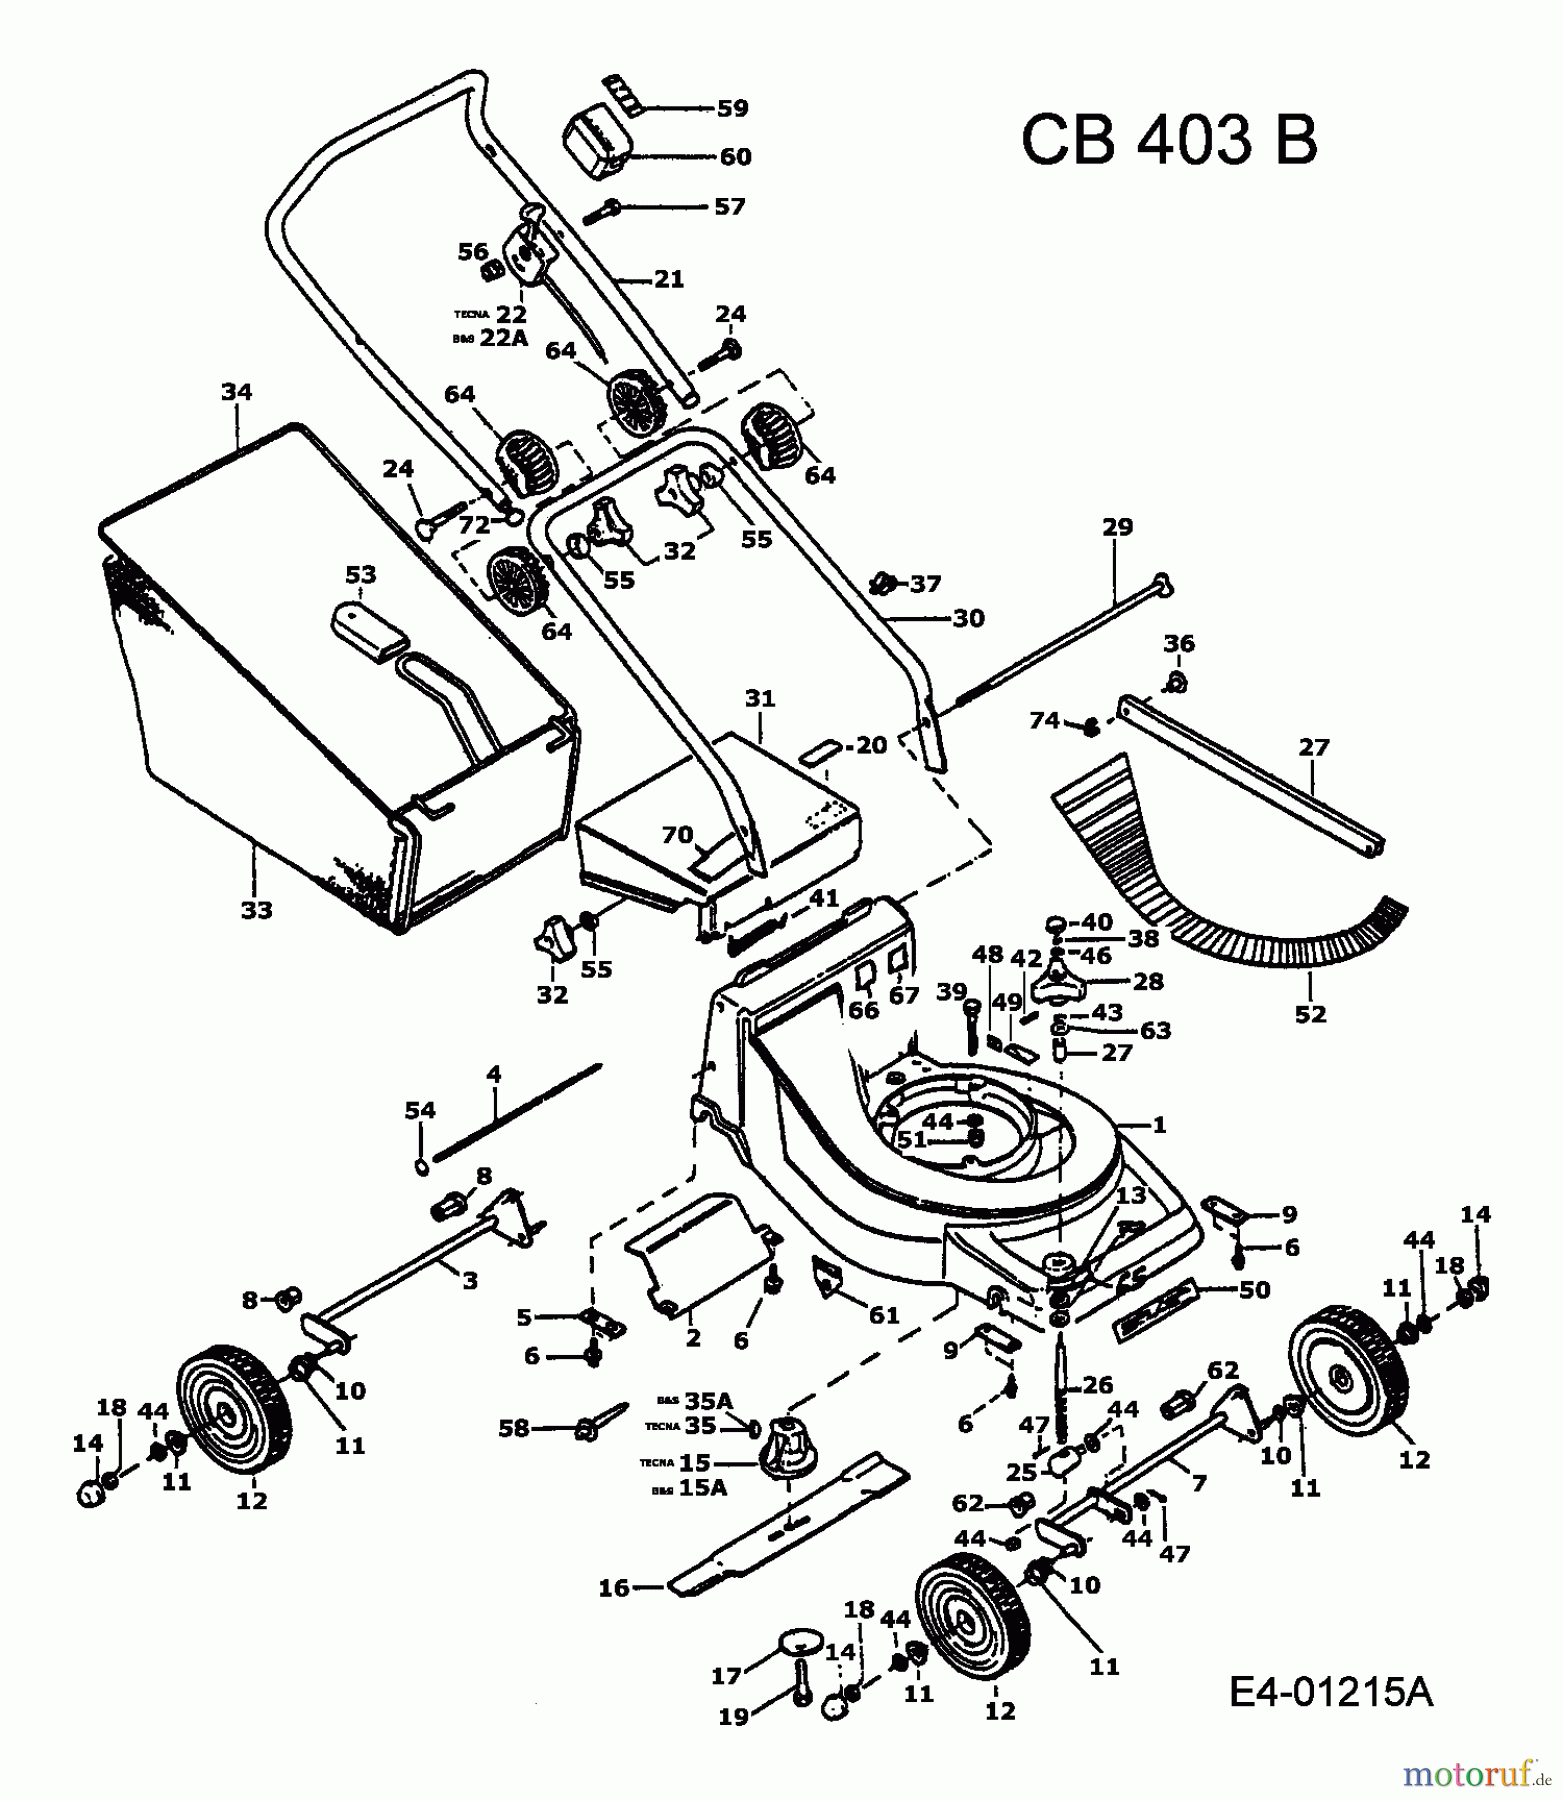  MTD Petrol mower CB 403 B 901B407A001  (1994) Basic machine